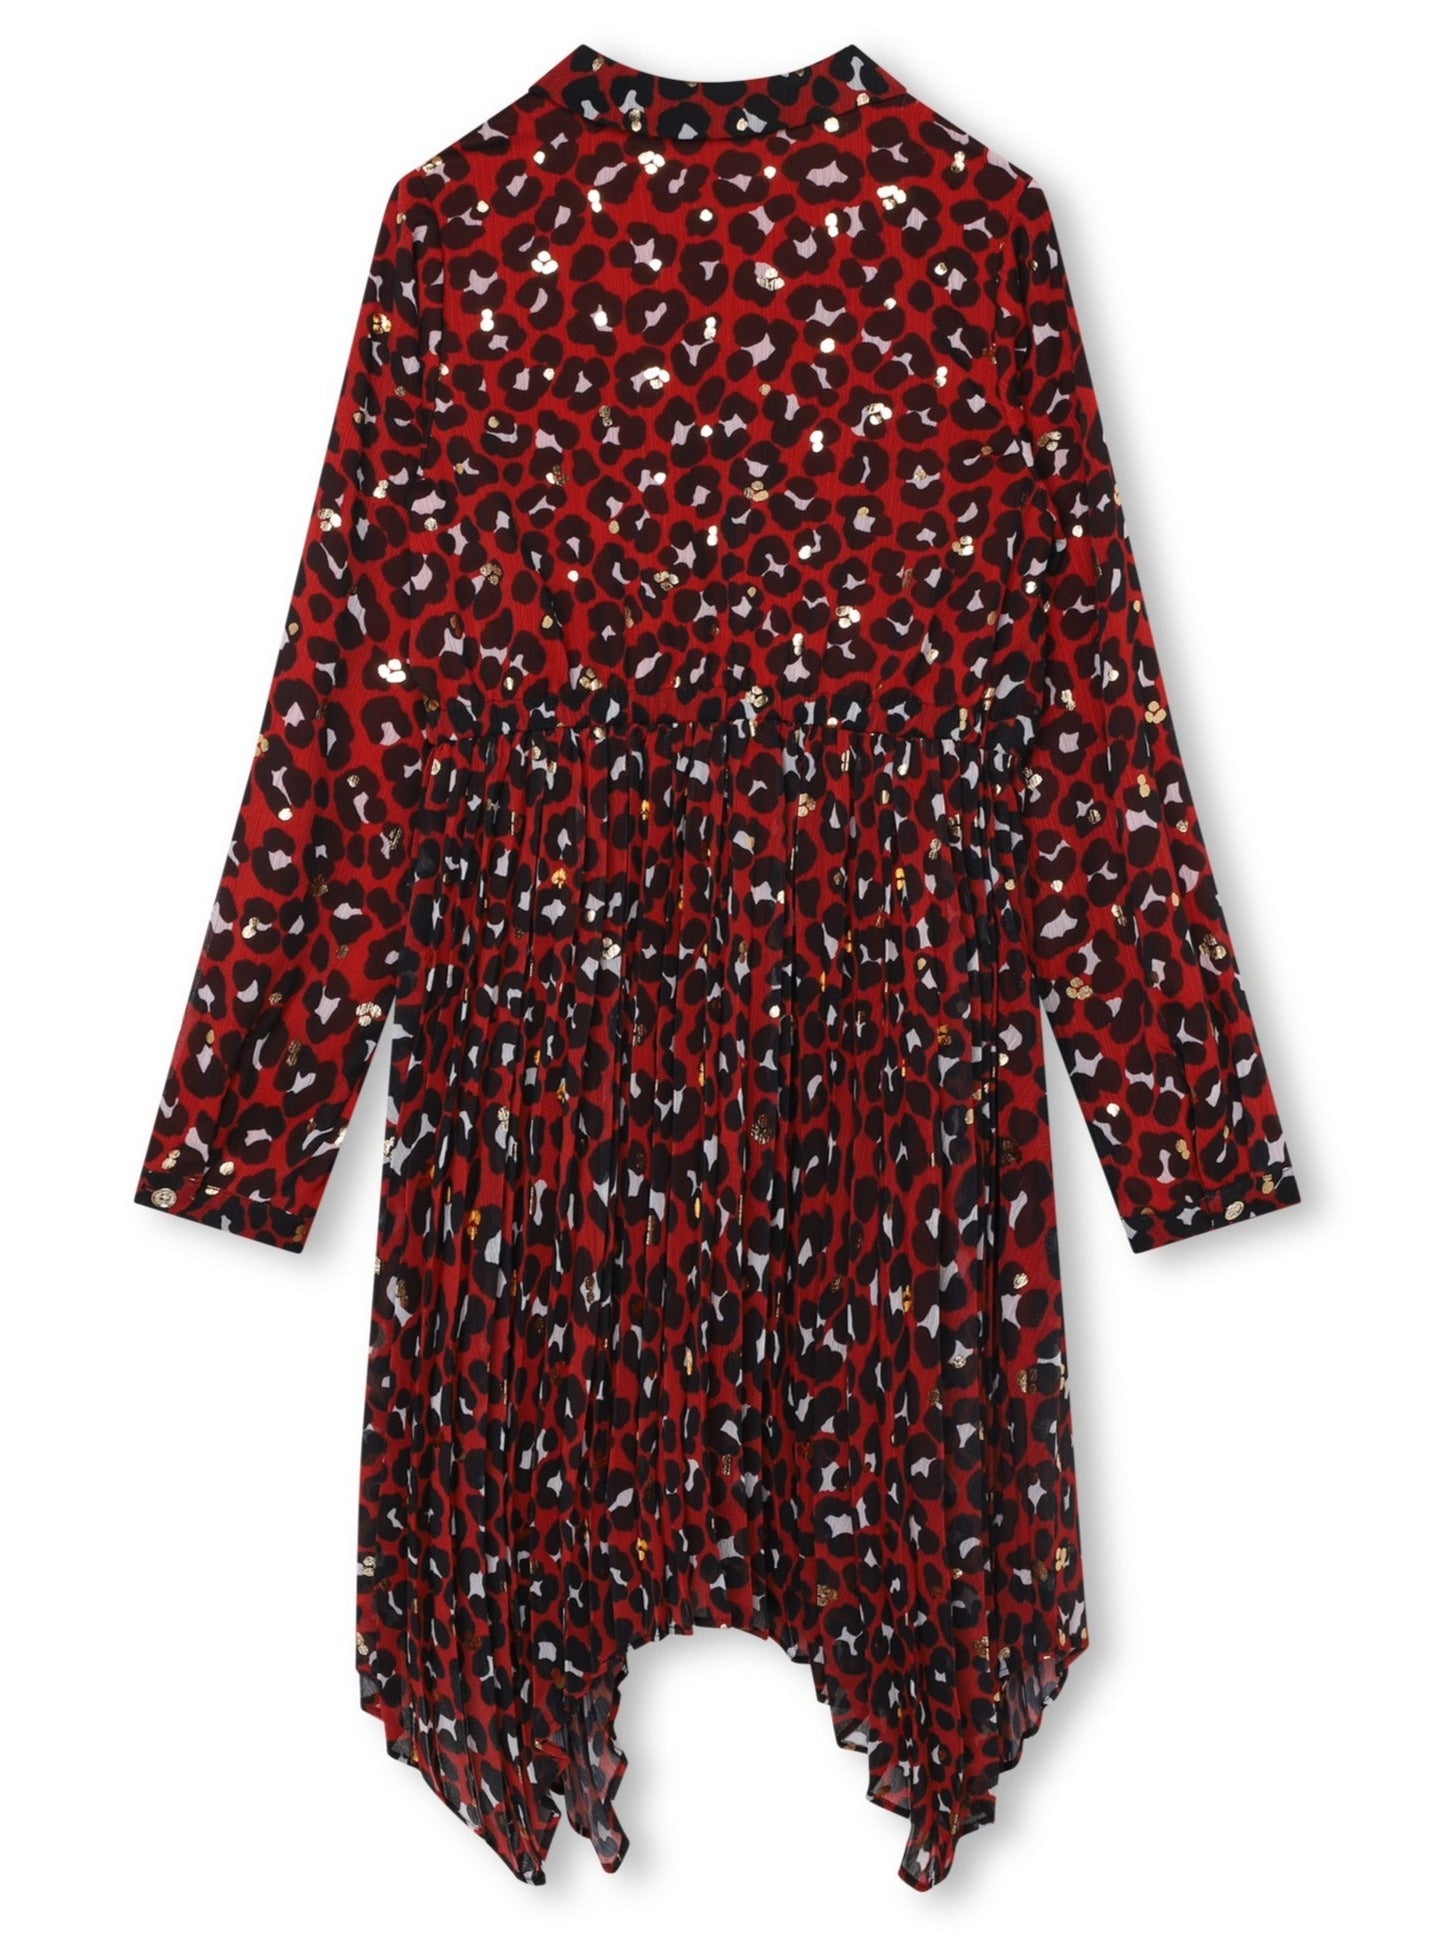 Michael Kors Red Printed Shirt Dress _R12175-961